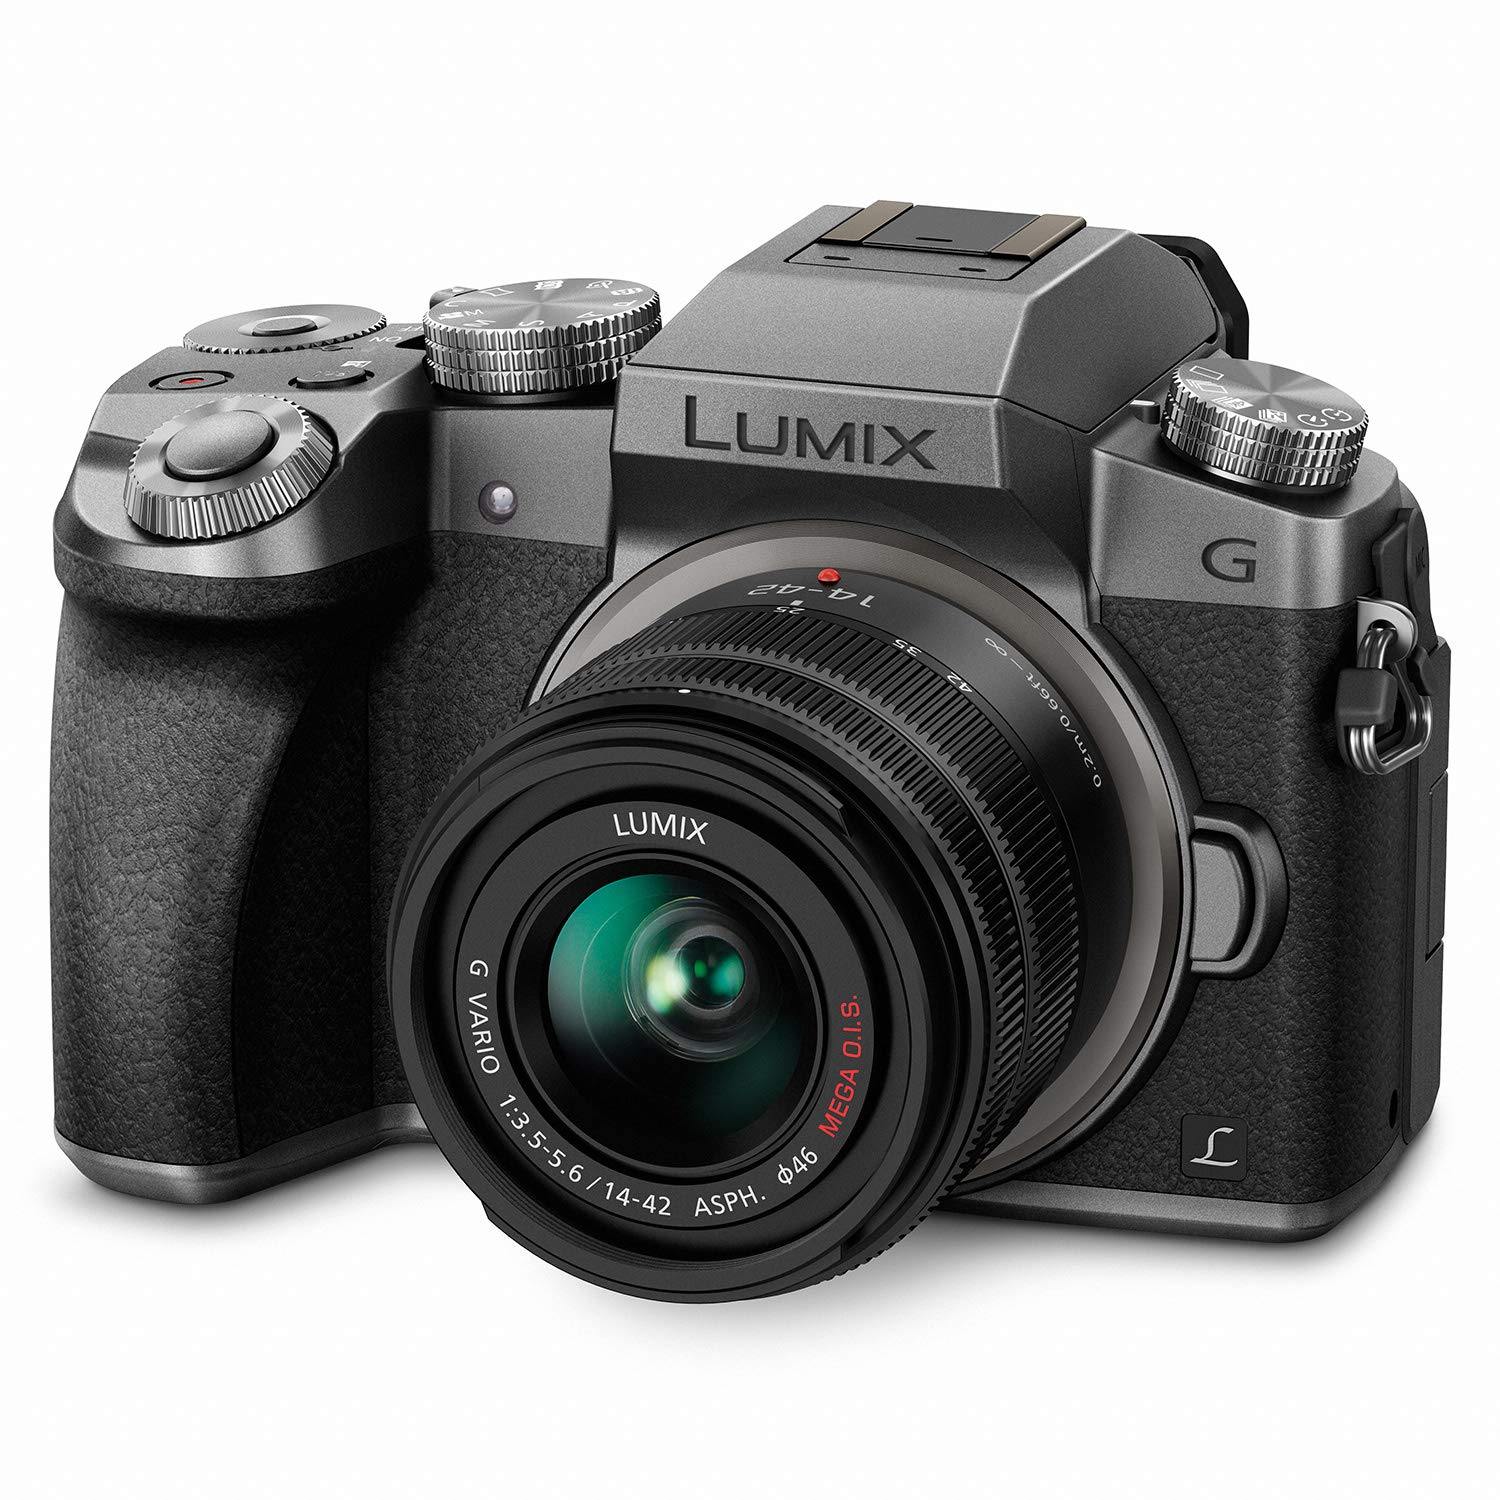 PANASONIC LUMIX G7 4K Mirrorless Camera, with 14-42mm MEGA O.I.S. Lens, 16 Megapixels, 3 Inch Touch LCD, DMC-G7KS (USA SILVER)